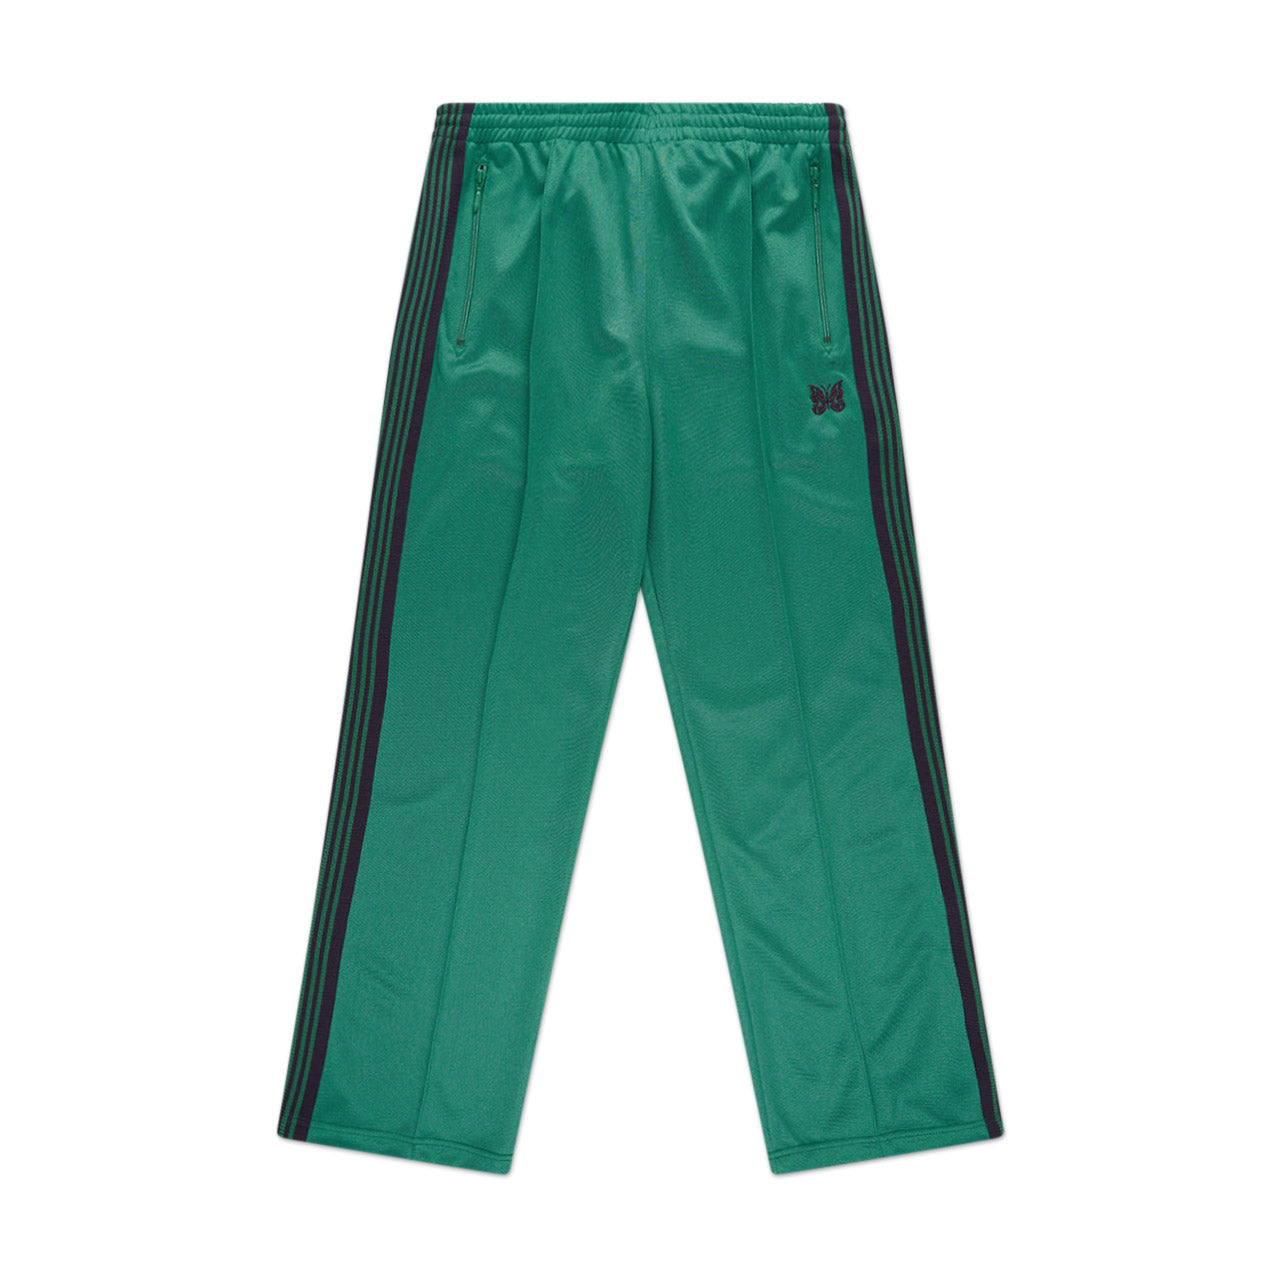 LNDR Green Dark Green Arctic Track Pants Size Sm - Med - 76% off